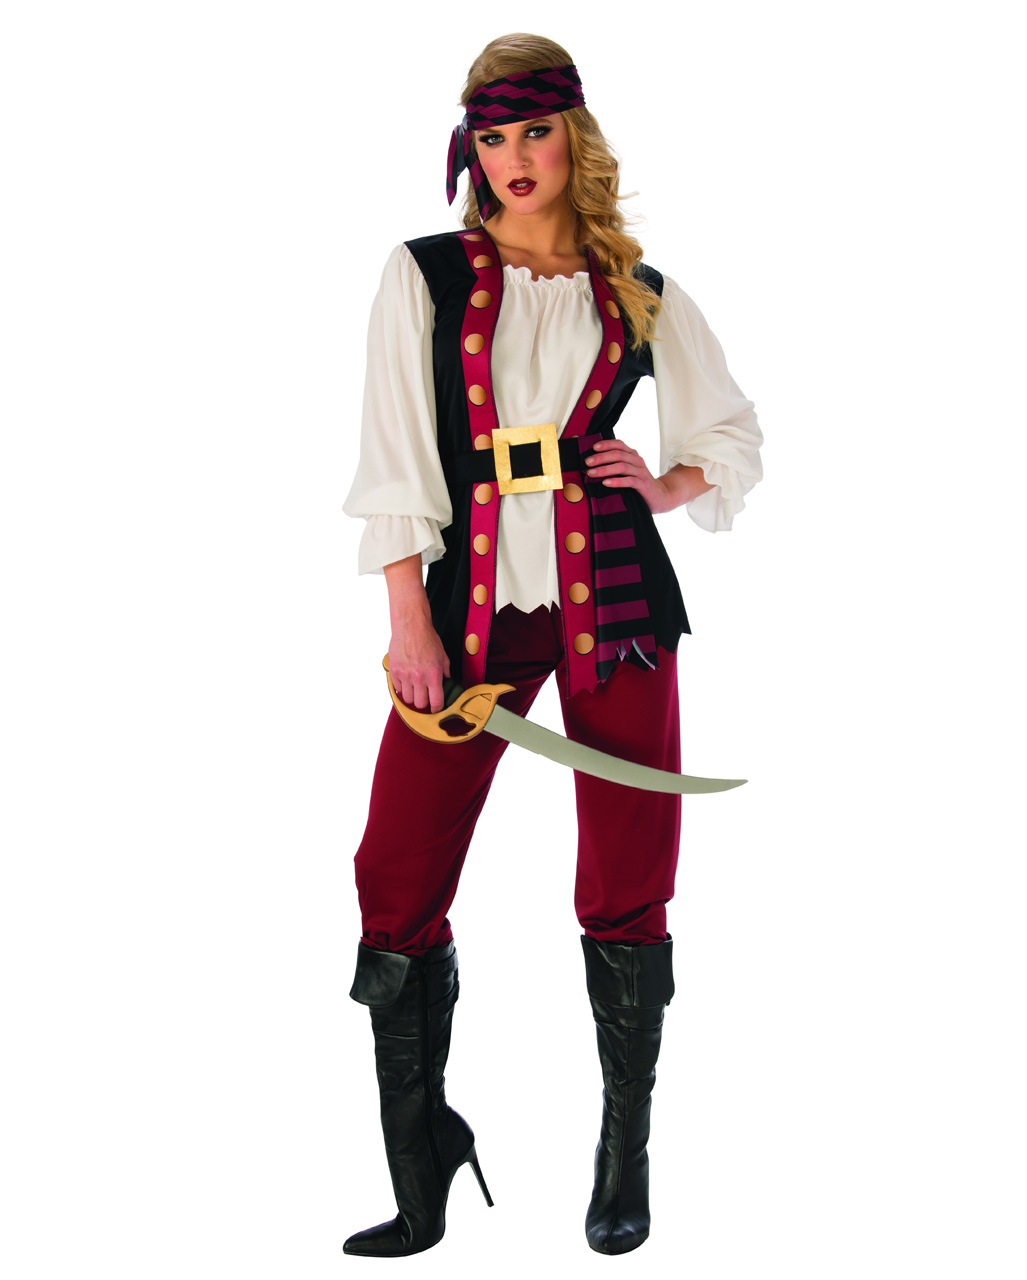 Pirate Costumes for sale in Miami, Florida | Facebook Marketplace | Facebook